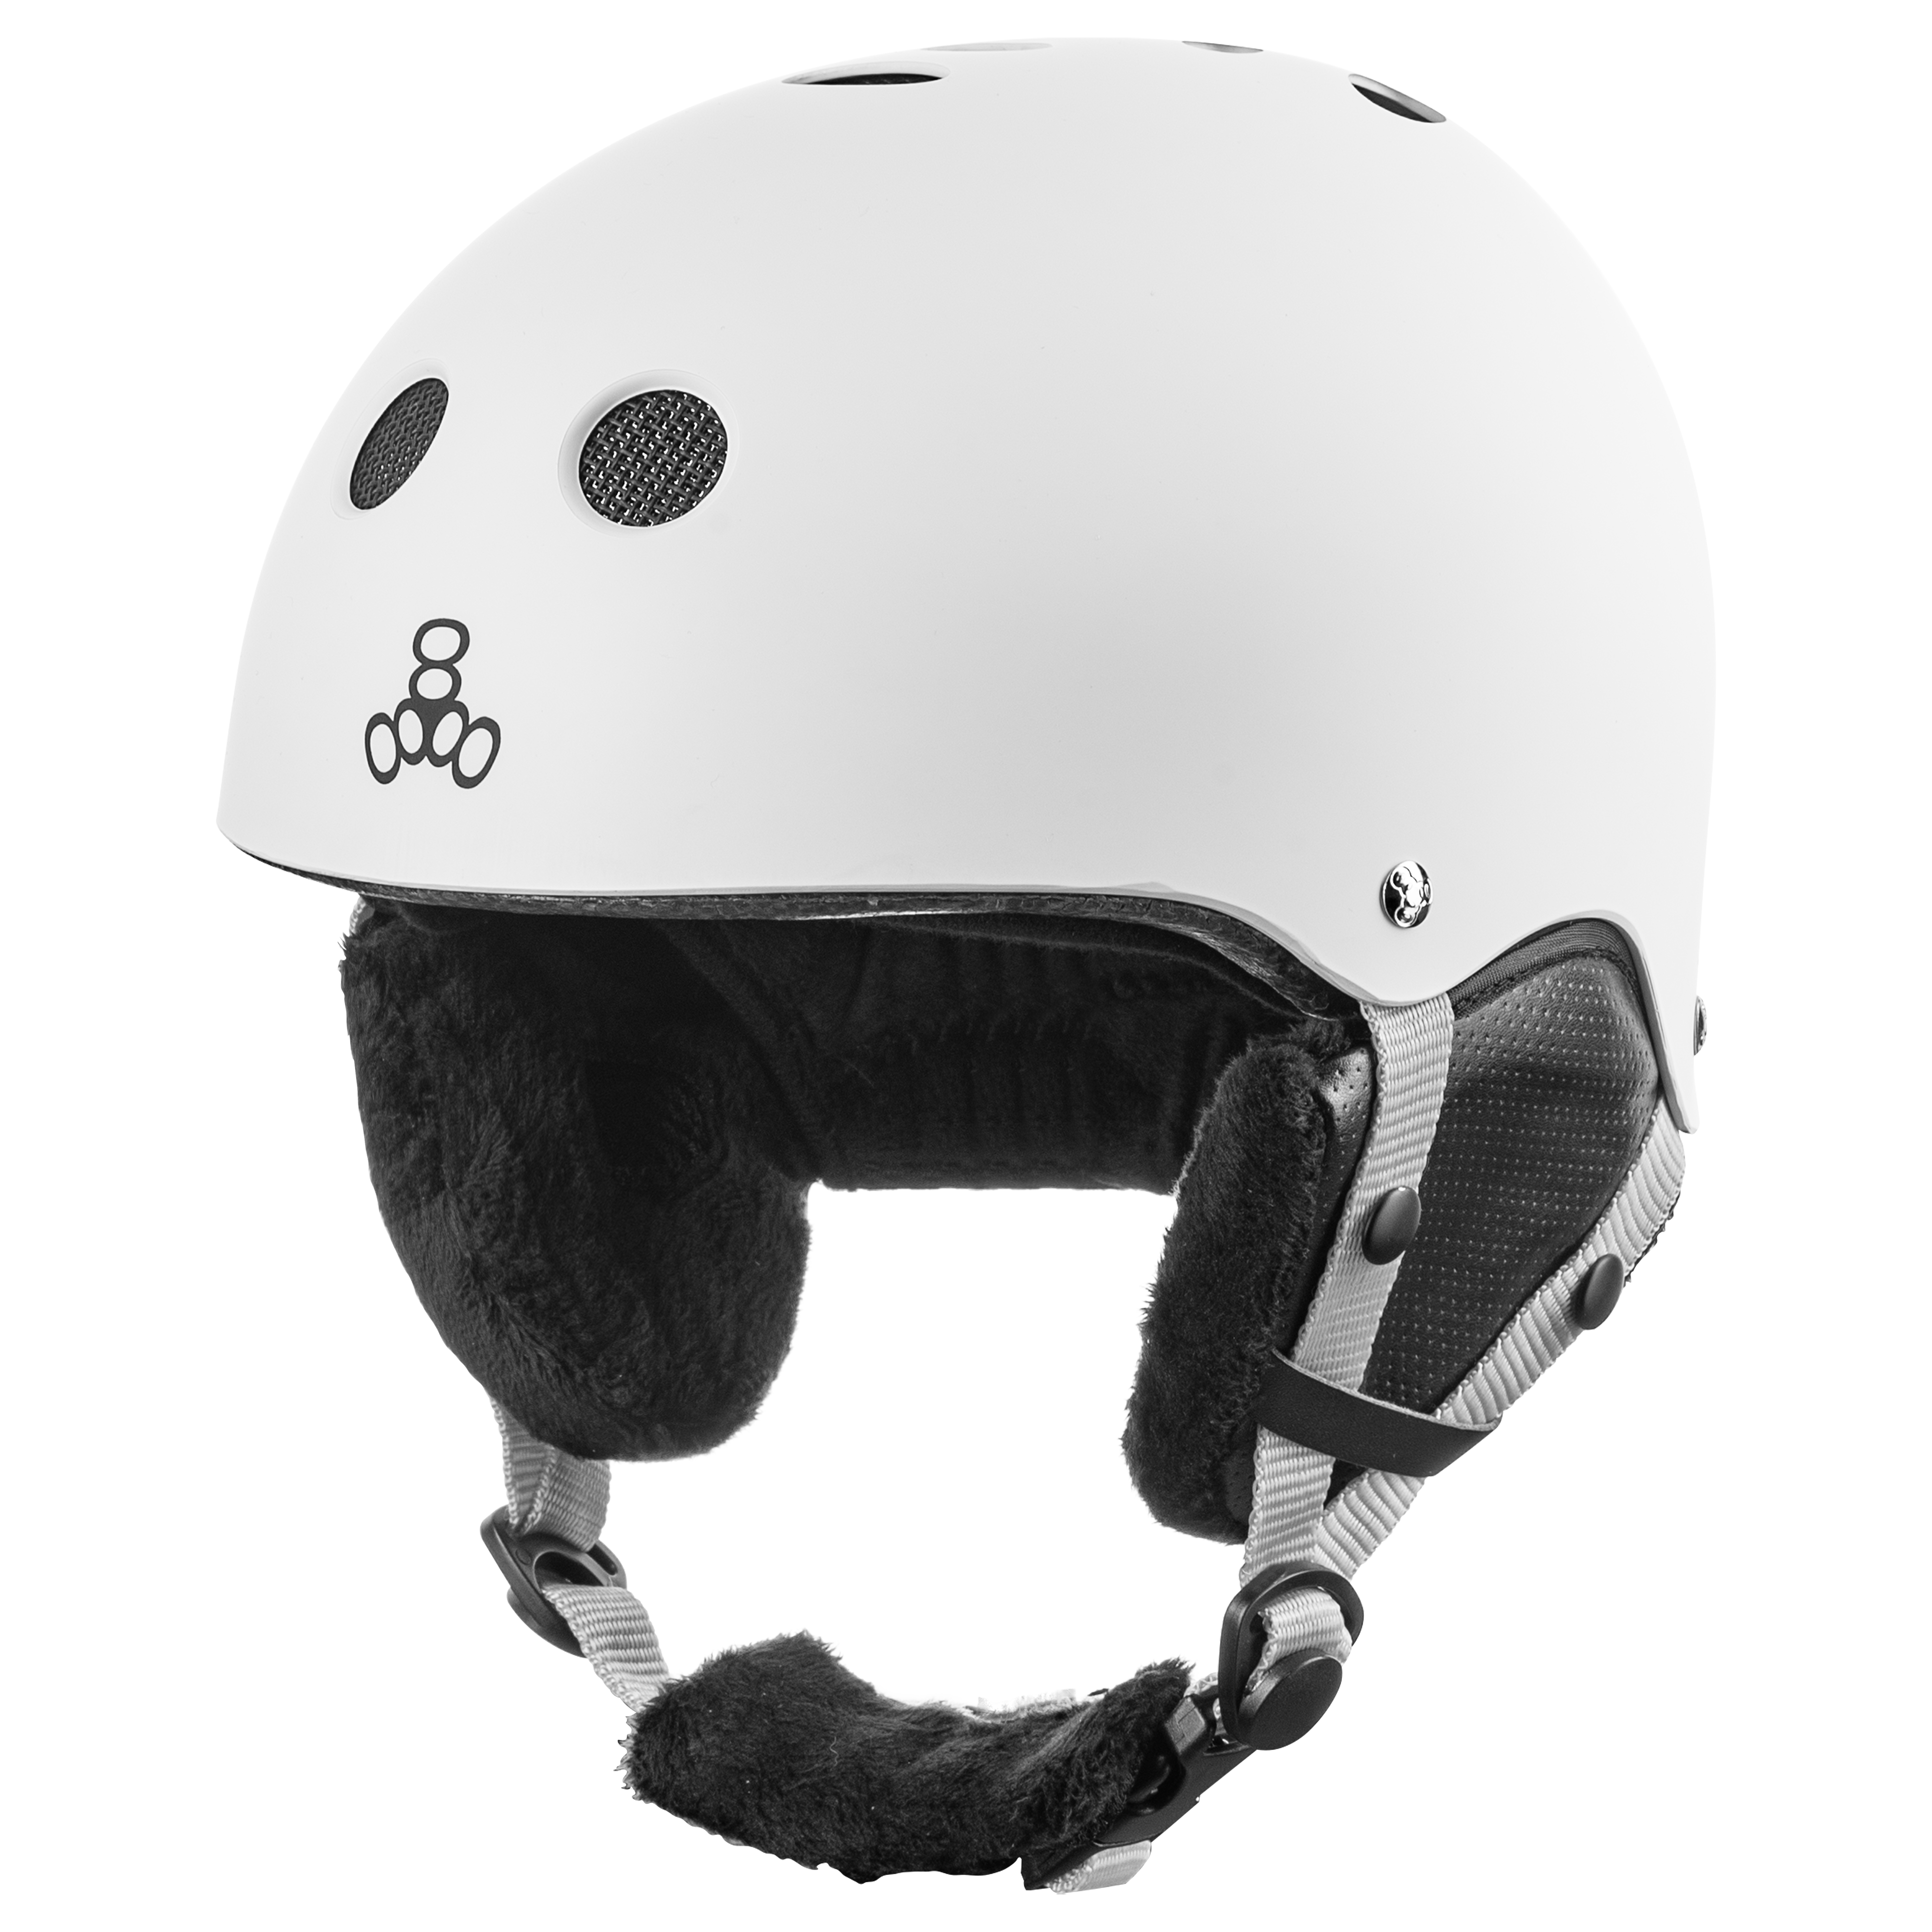 Купить шлем для сноубординга Triple8 Halo Snow Standart White Rubber (S/M) в Киеве